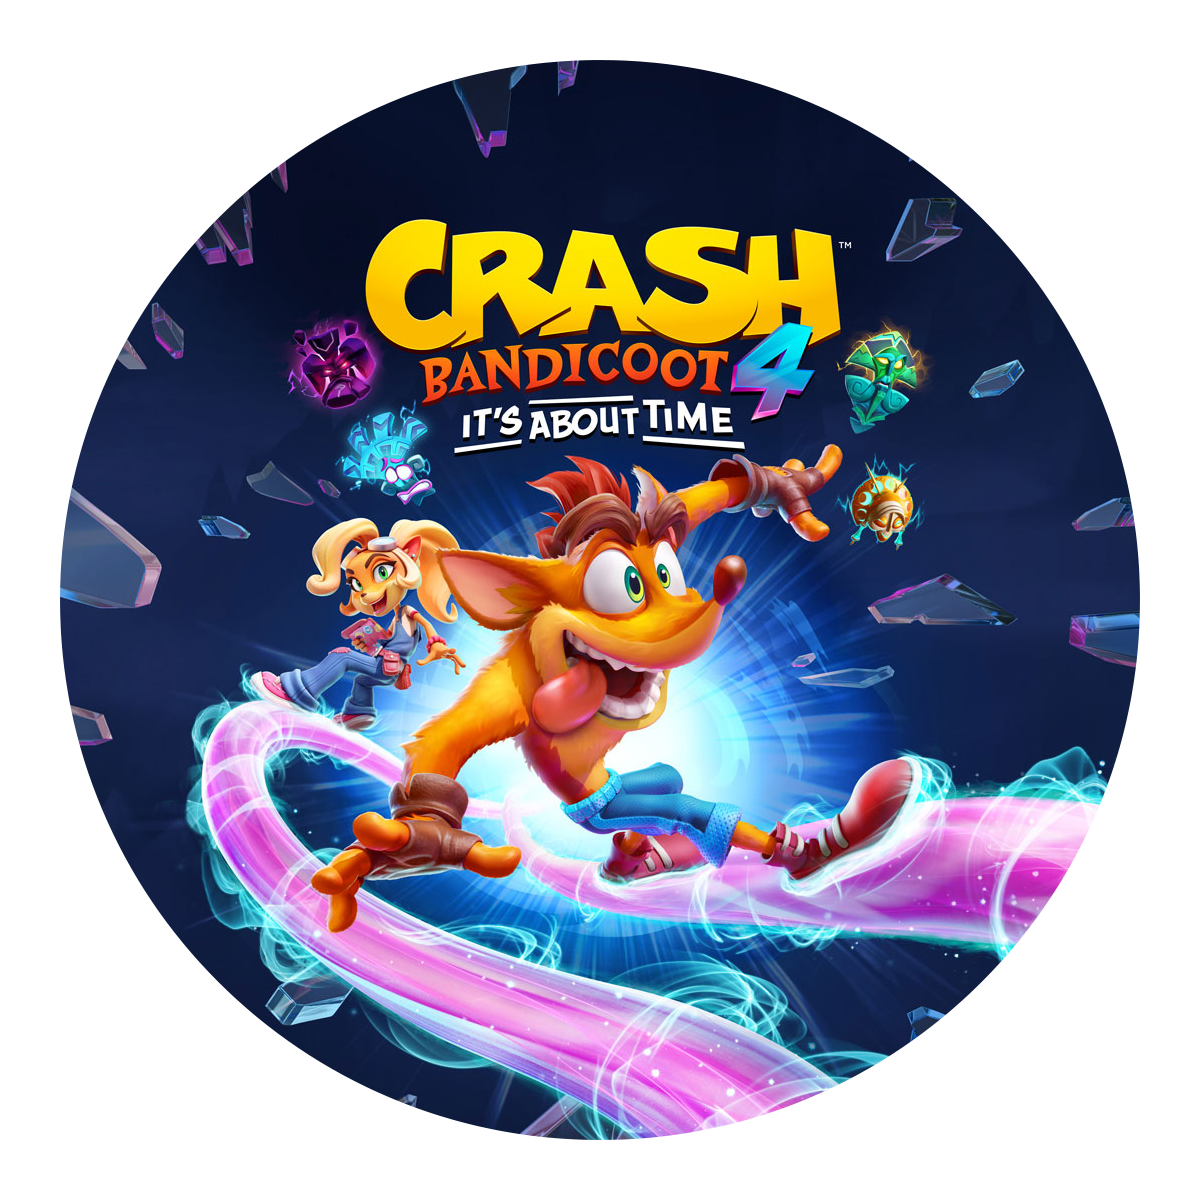 Crash Bandicoot 4: It's About Time in Crash Bandicoot 